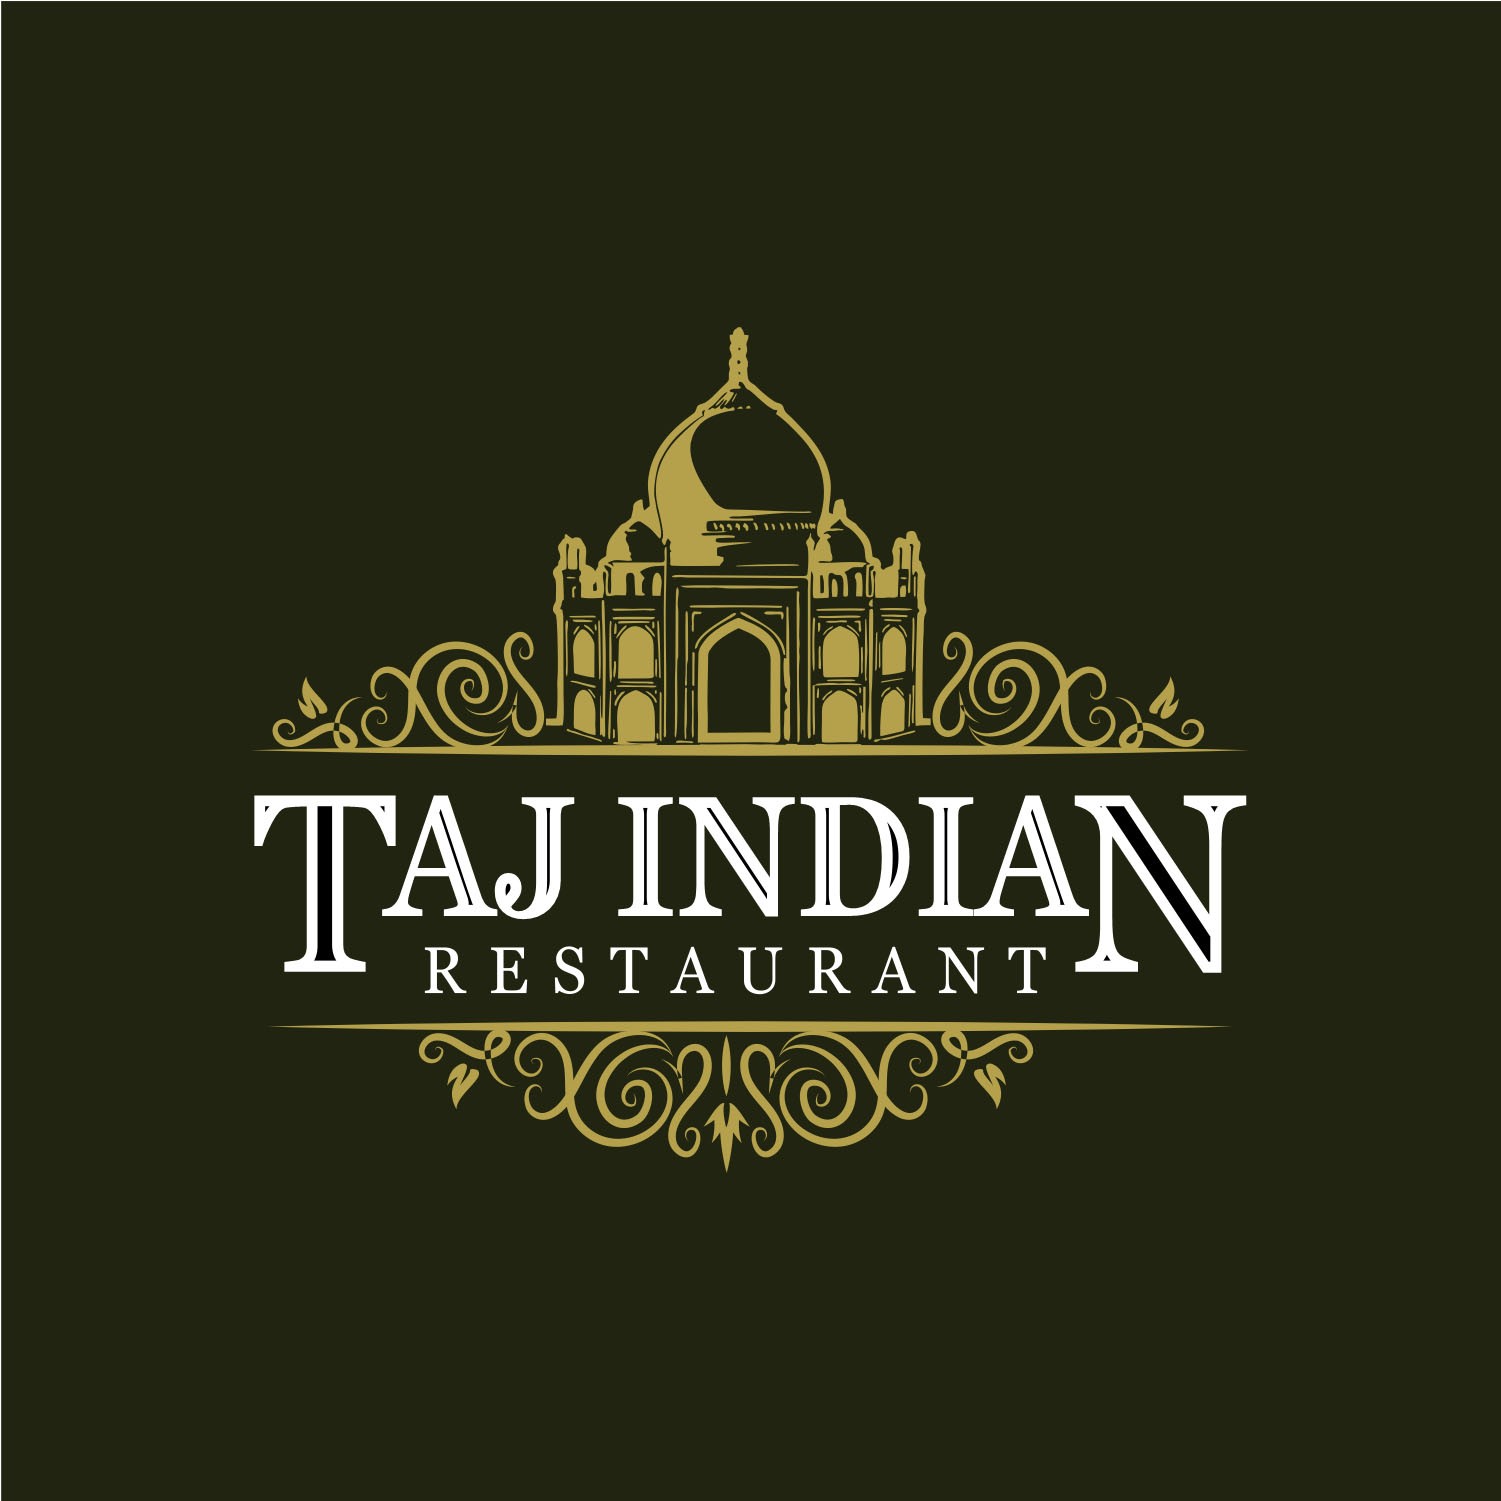 Taj Indian Restaurant 412 Harding Place, Suite 101